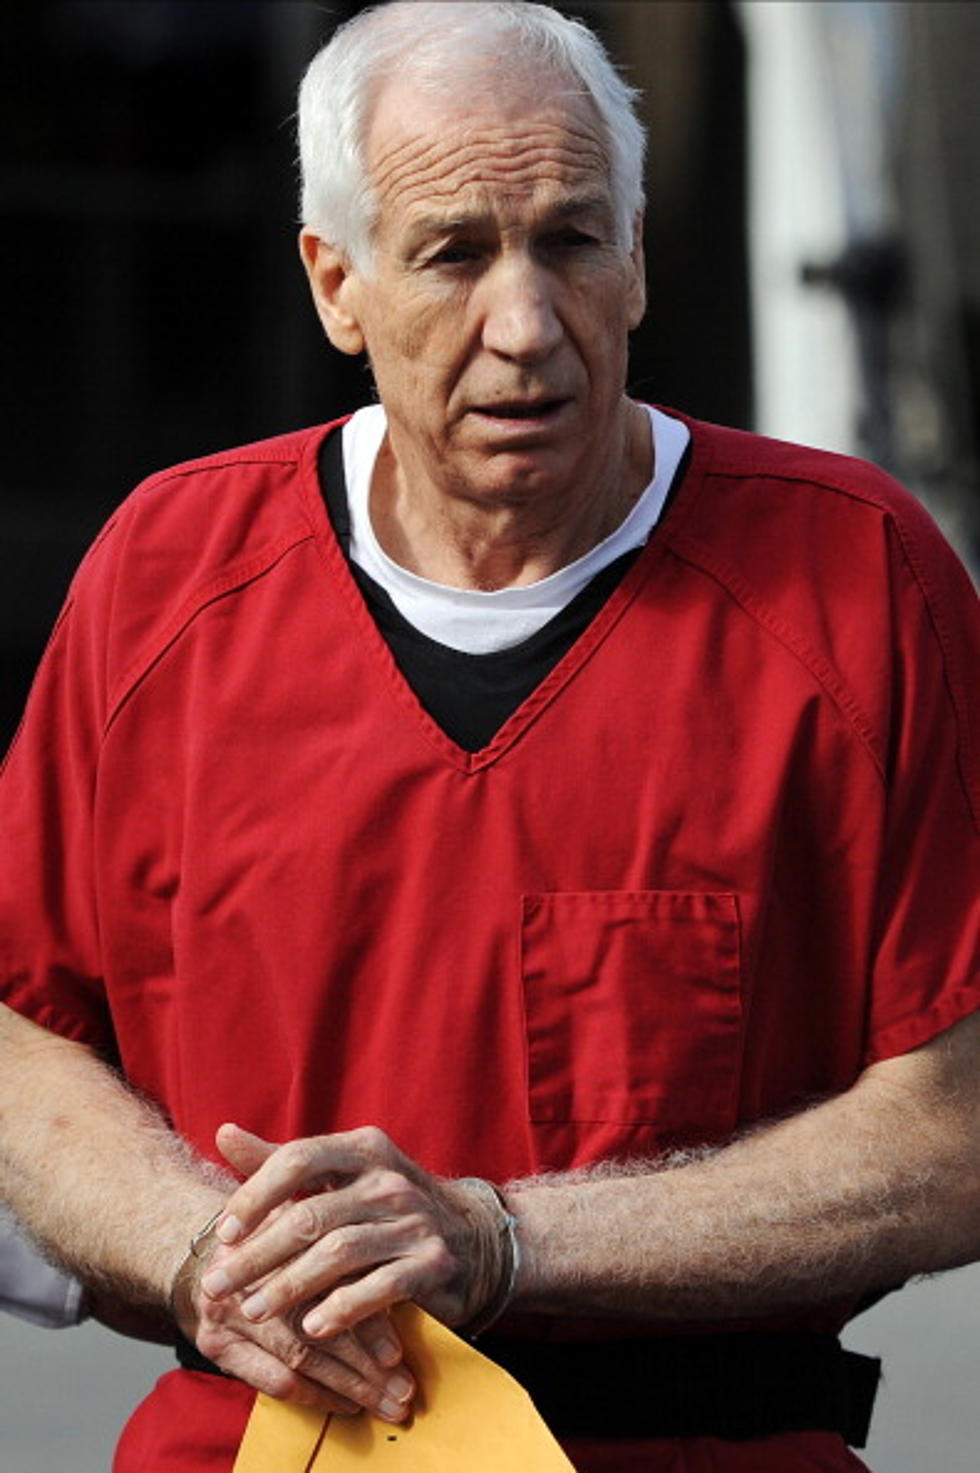 Jerry Sandusky Sentenced to 30-60 Years In Prison